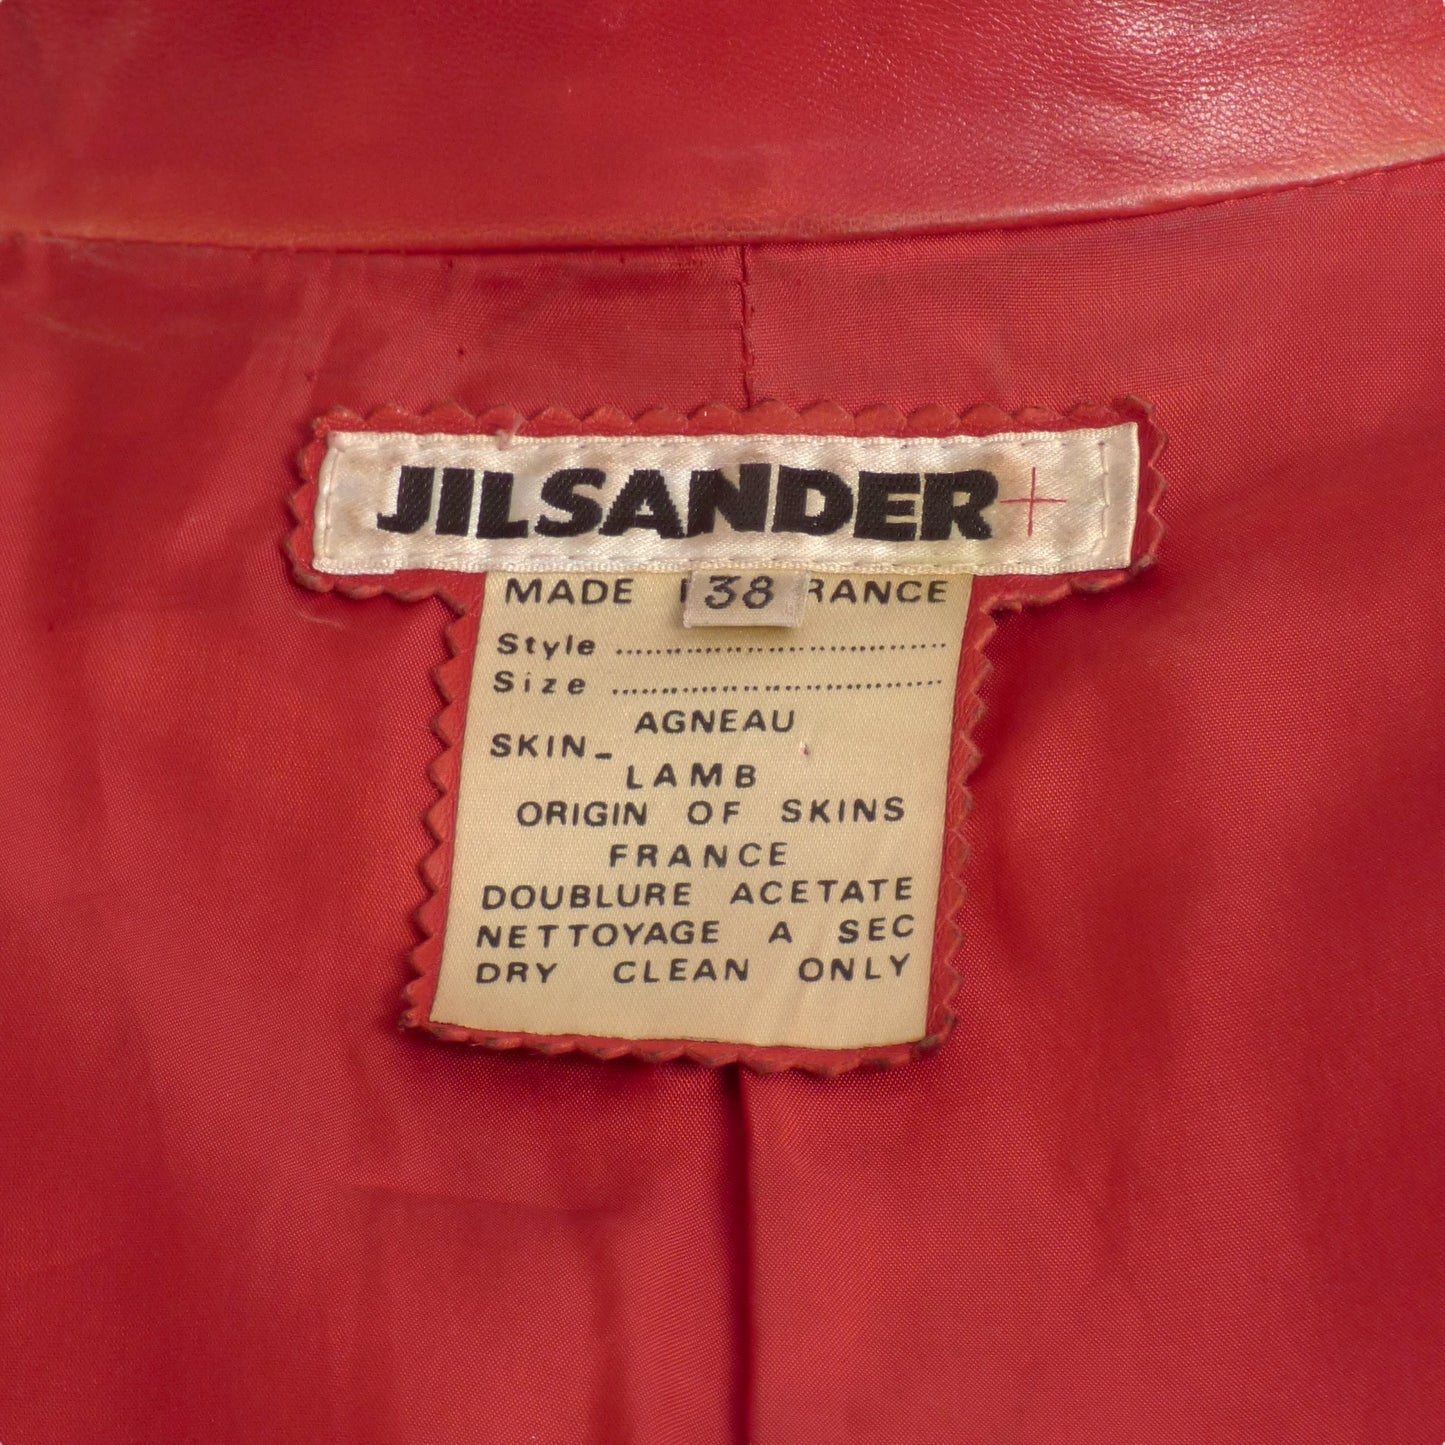 JIL SANDER-1980s Red Leather Jacket, Size-8